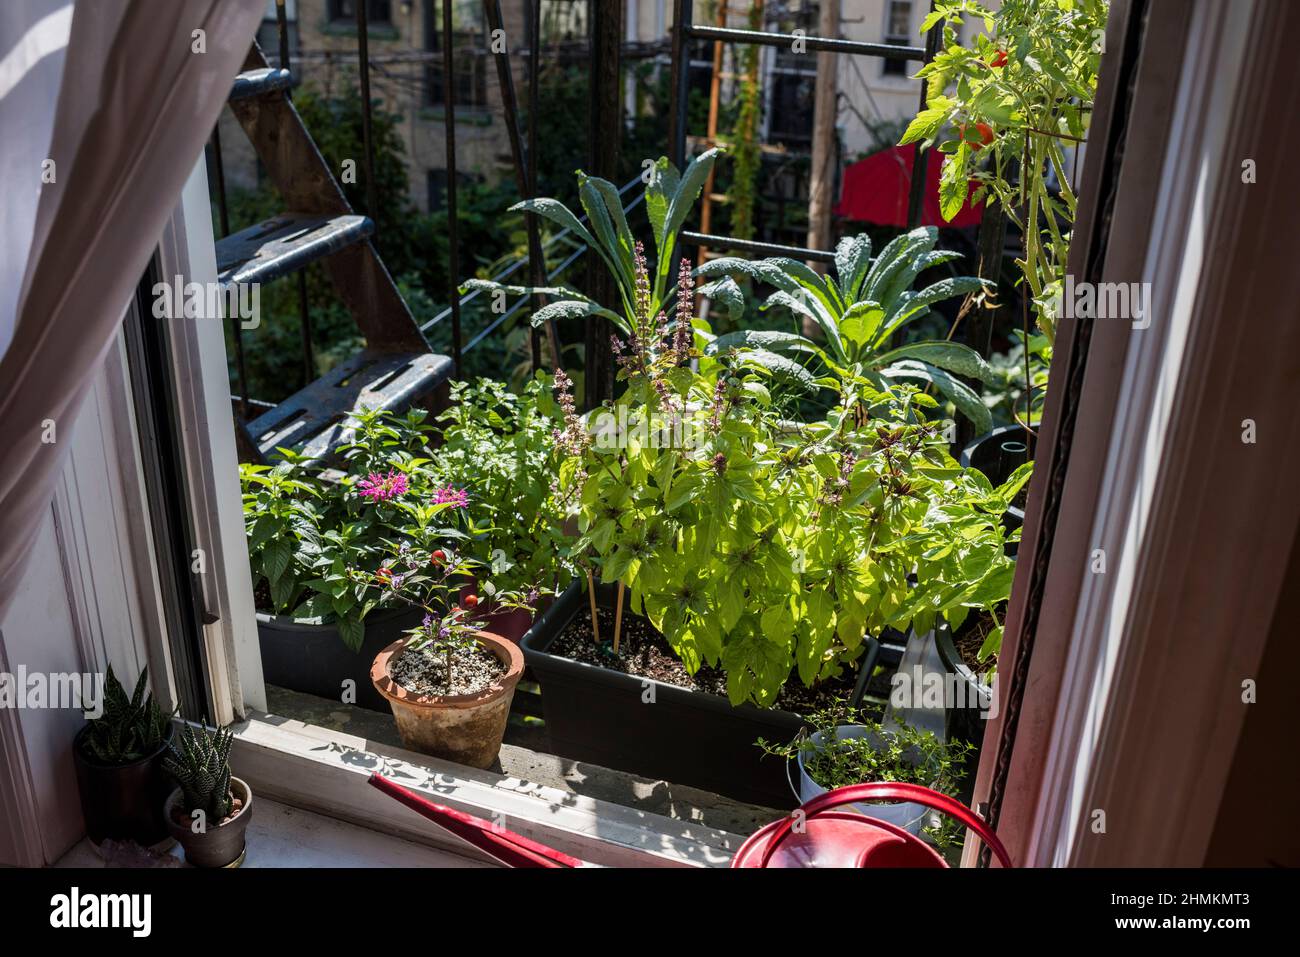 Fire escape garden growing vegetable and herbs Stock Photo